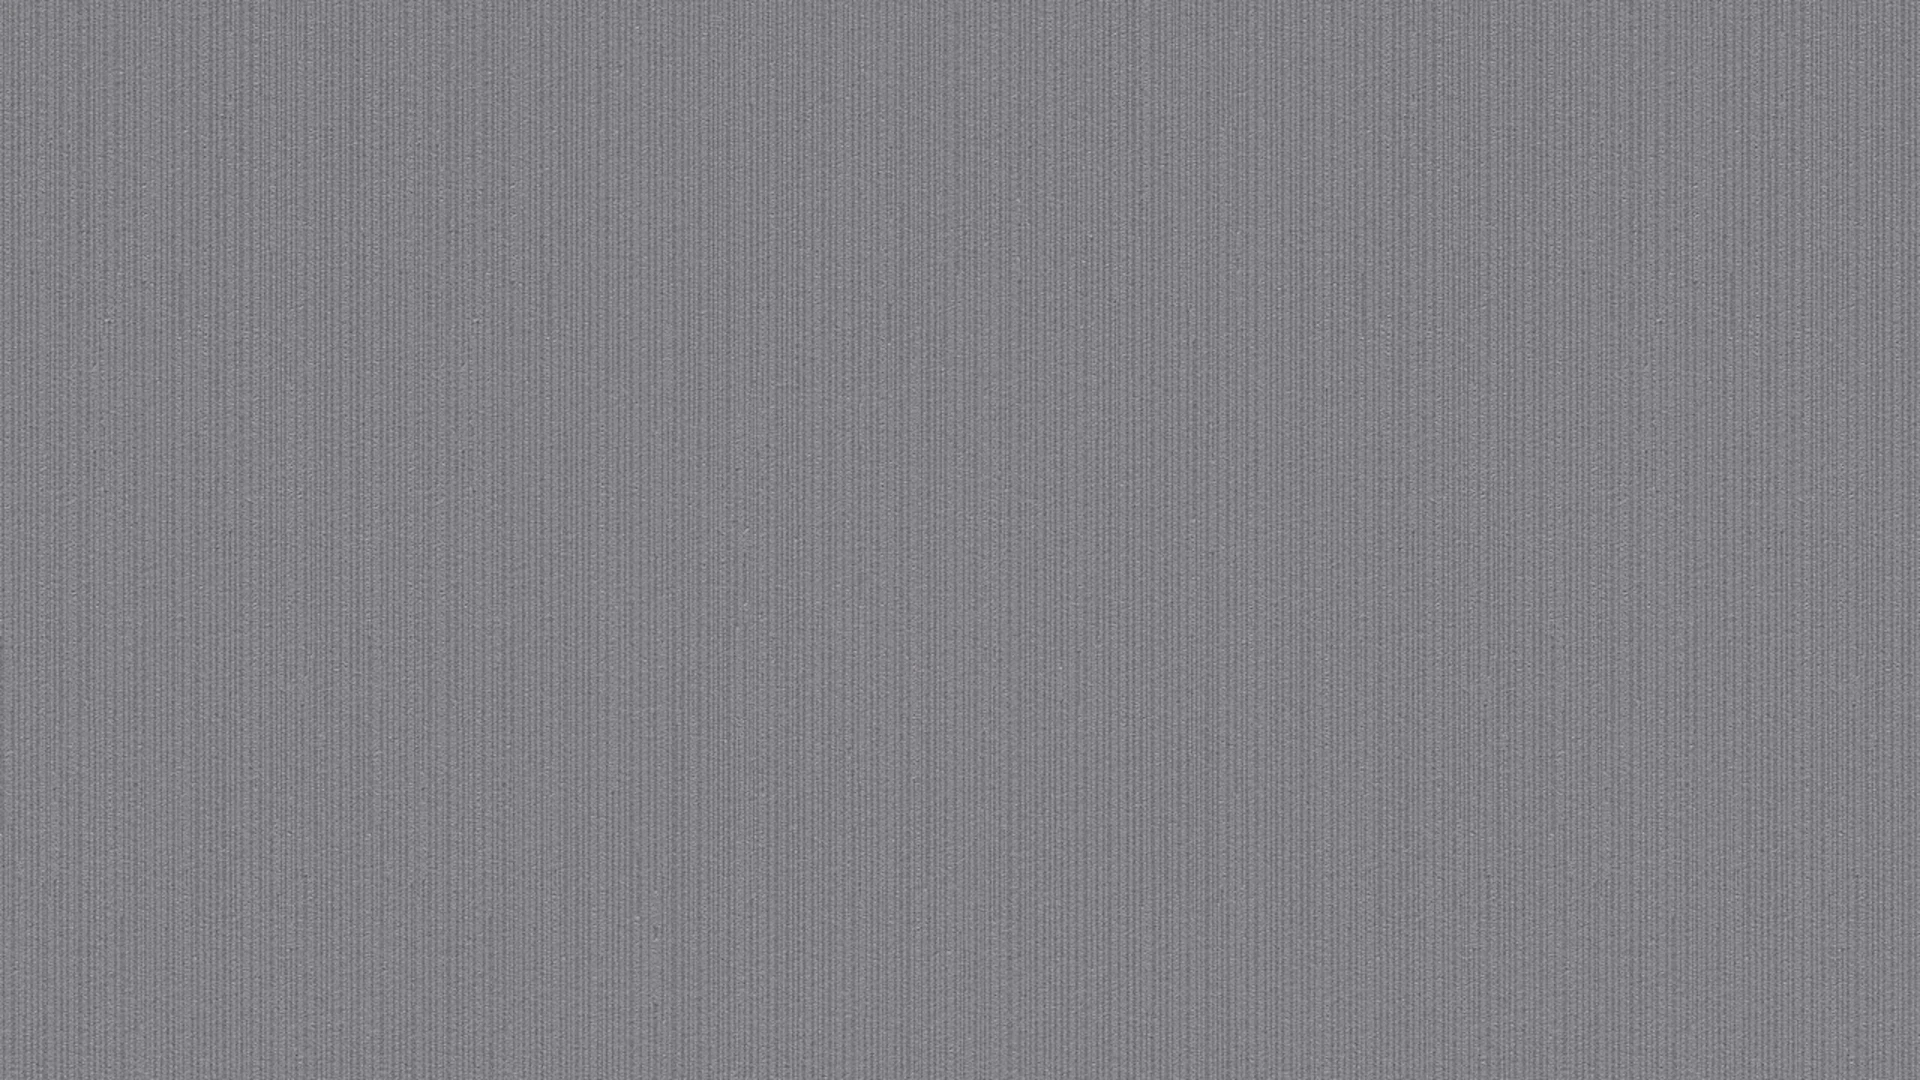 vinyl wallpaper grey modern stripes flavour 773